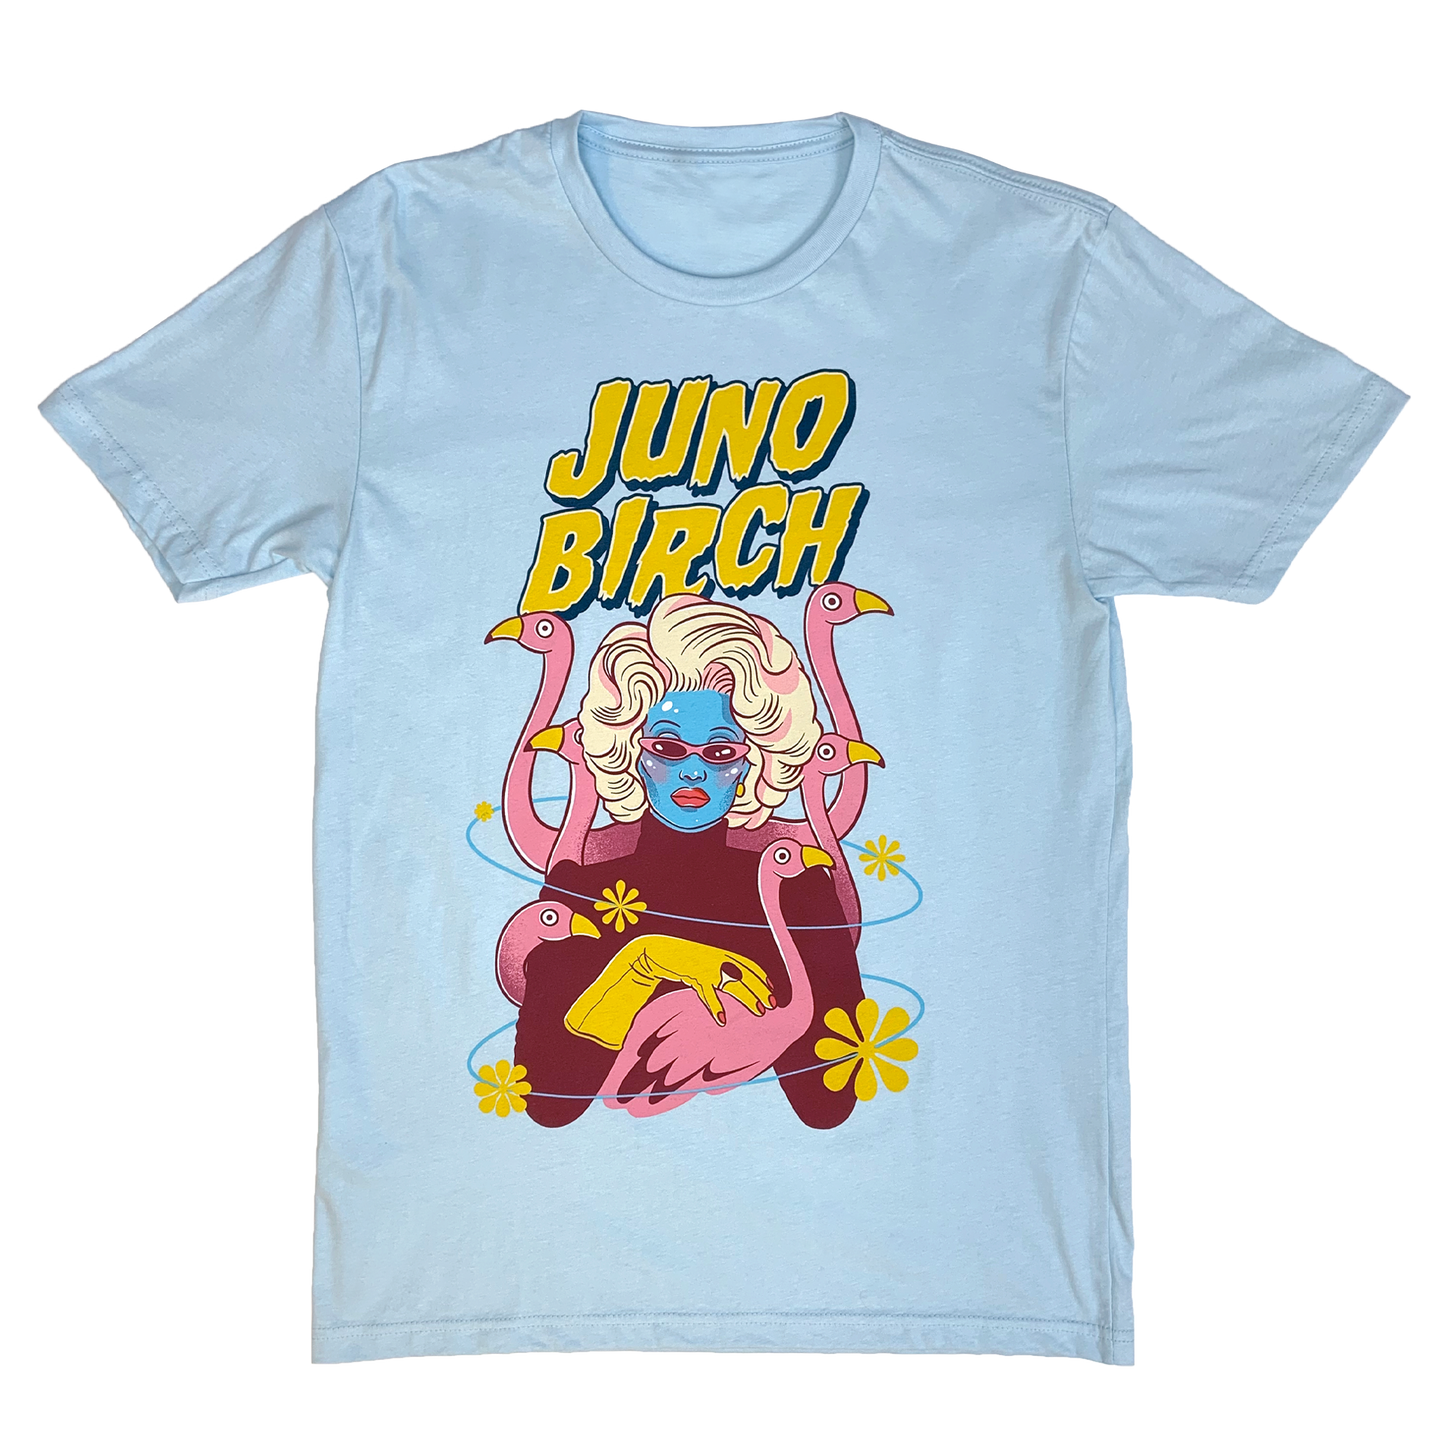 Juno Birch Flamingo Shirt